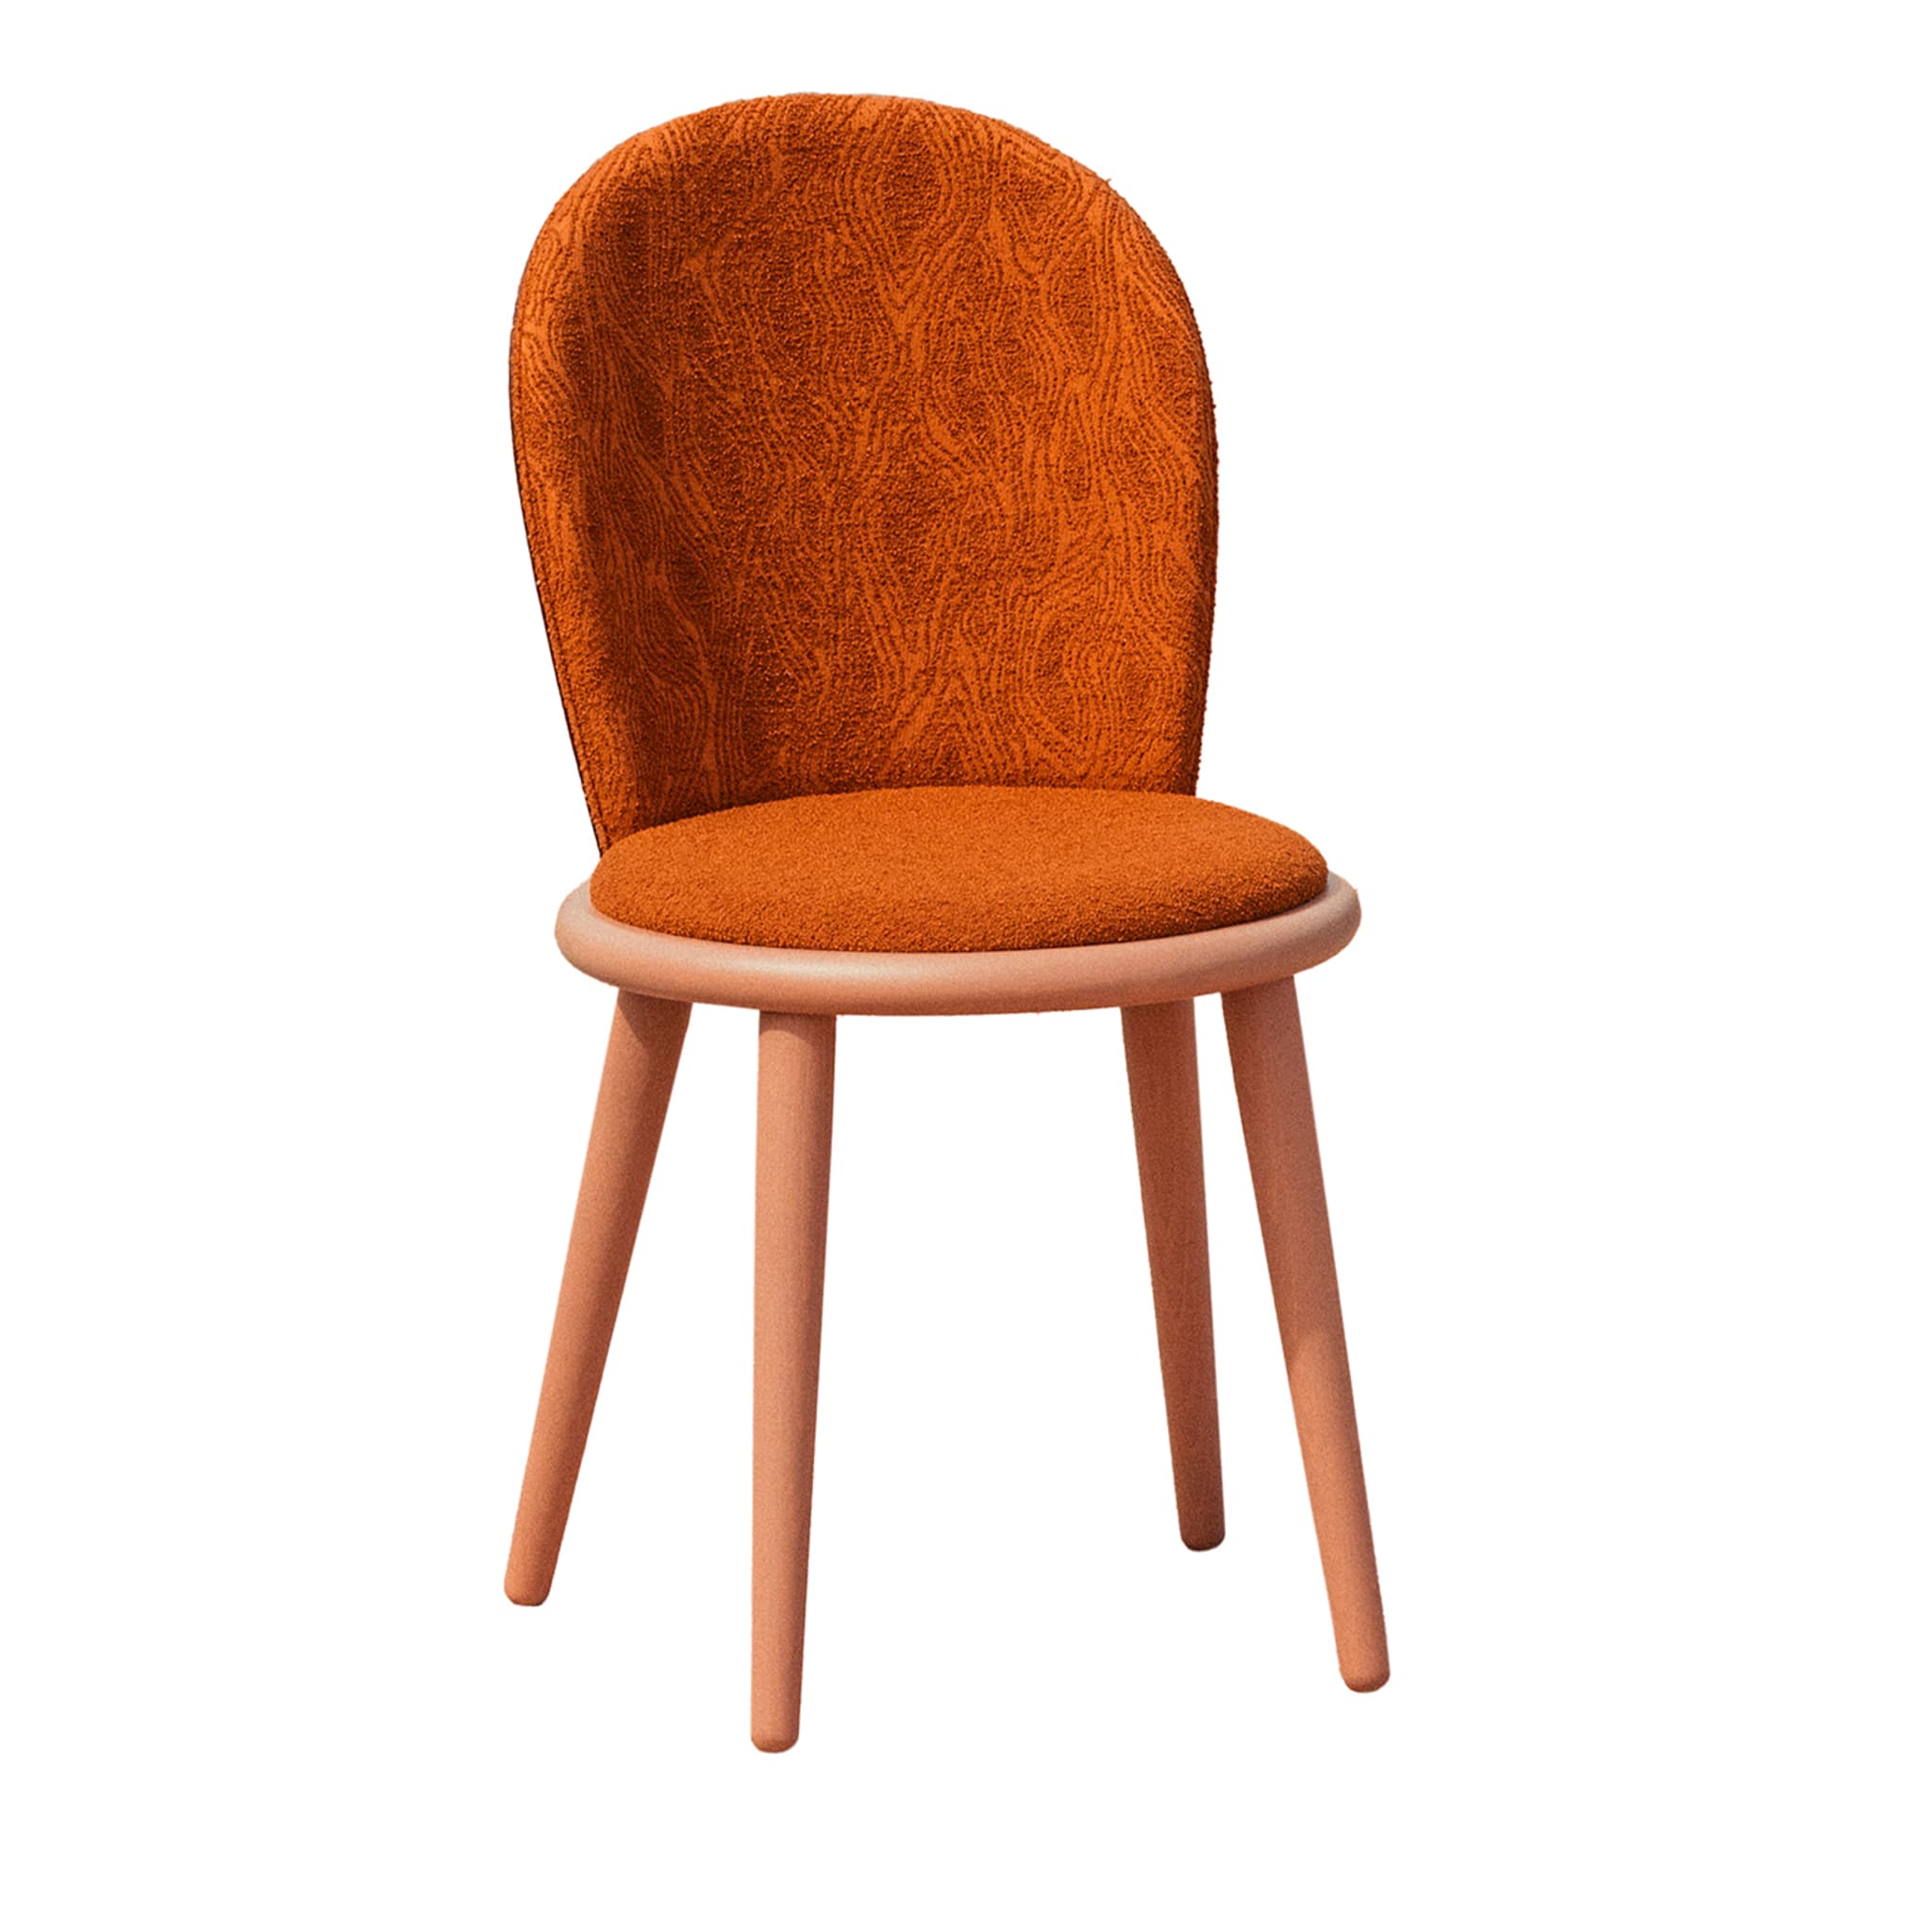 Veretta 921 Orange Chair by Cristina Celestino - Main view